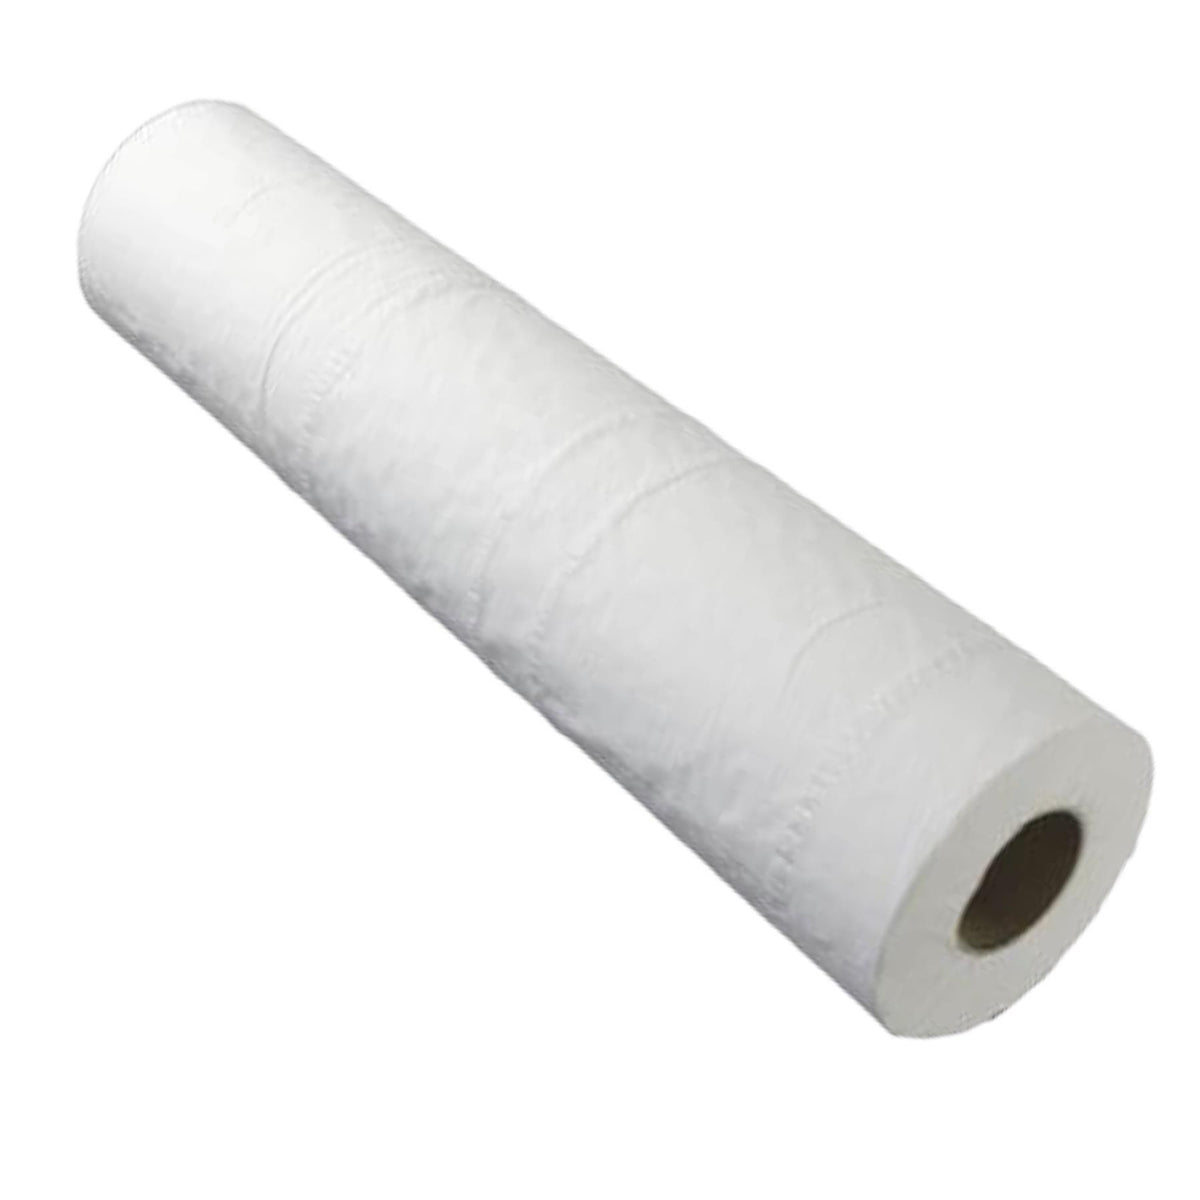 White Hygiene Roll 50m, Case of 9 Rolls